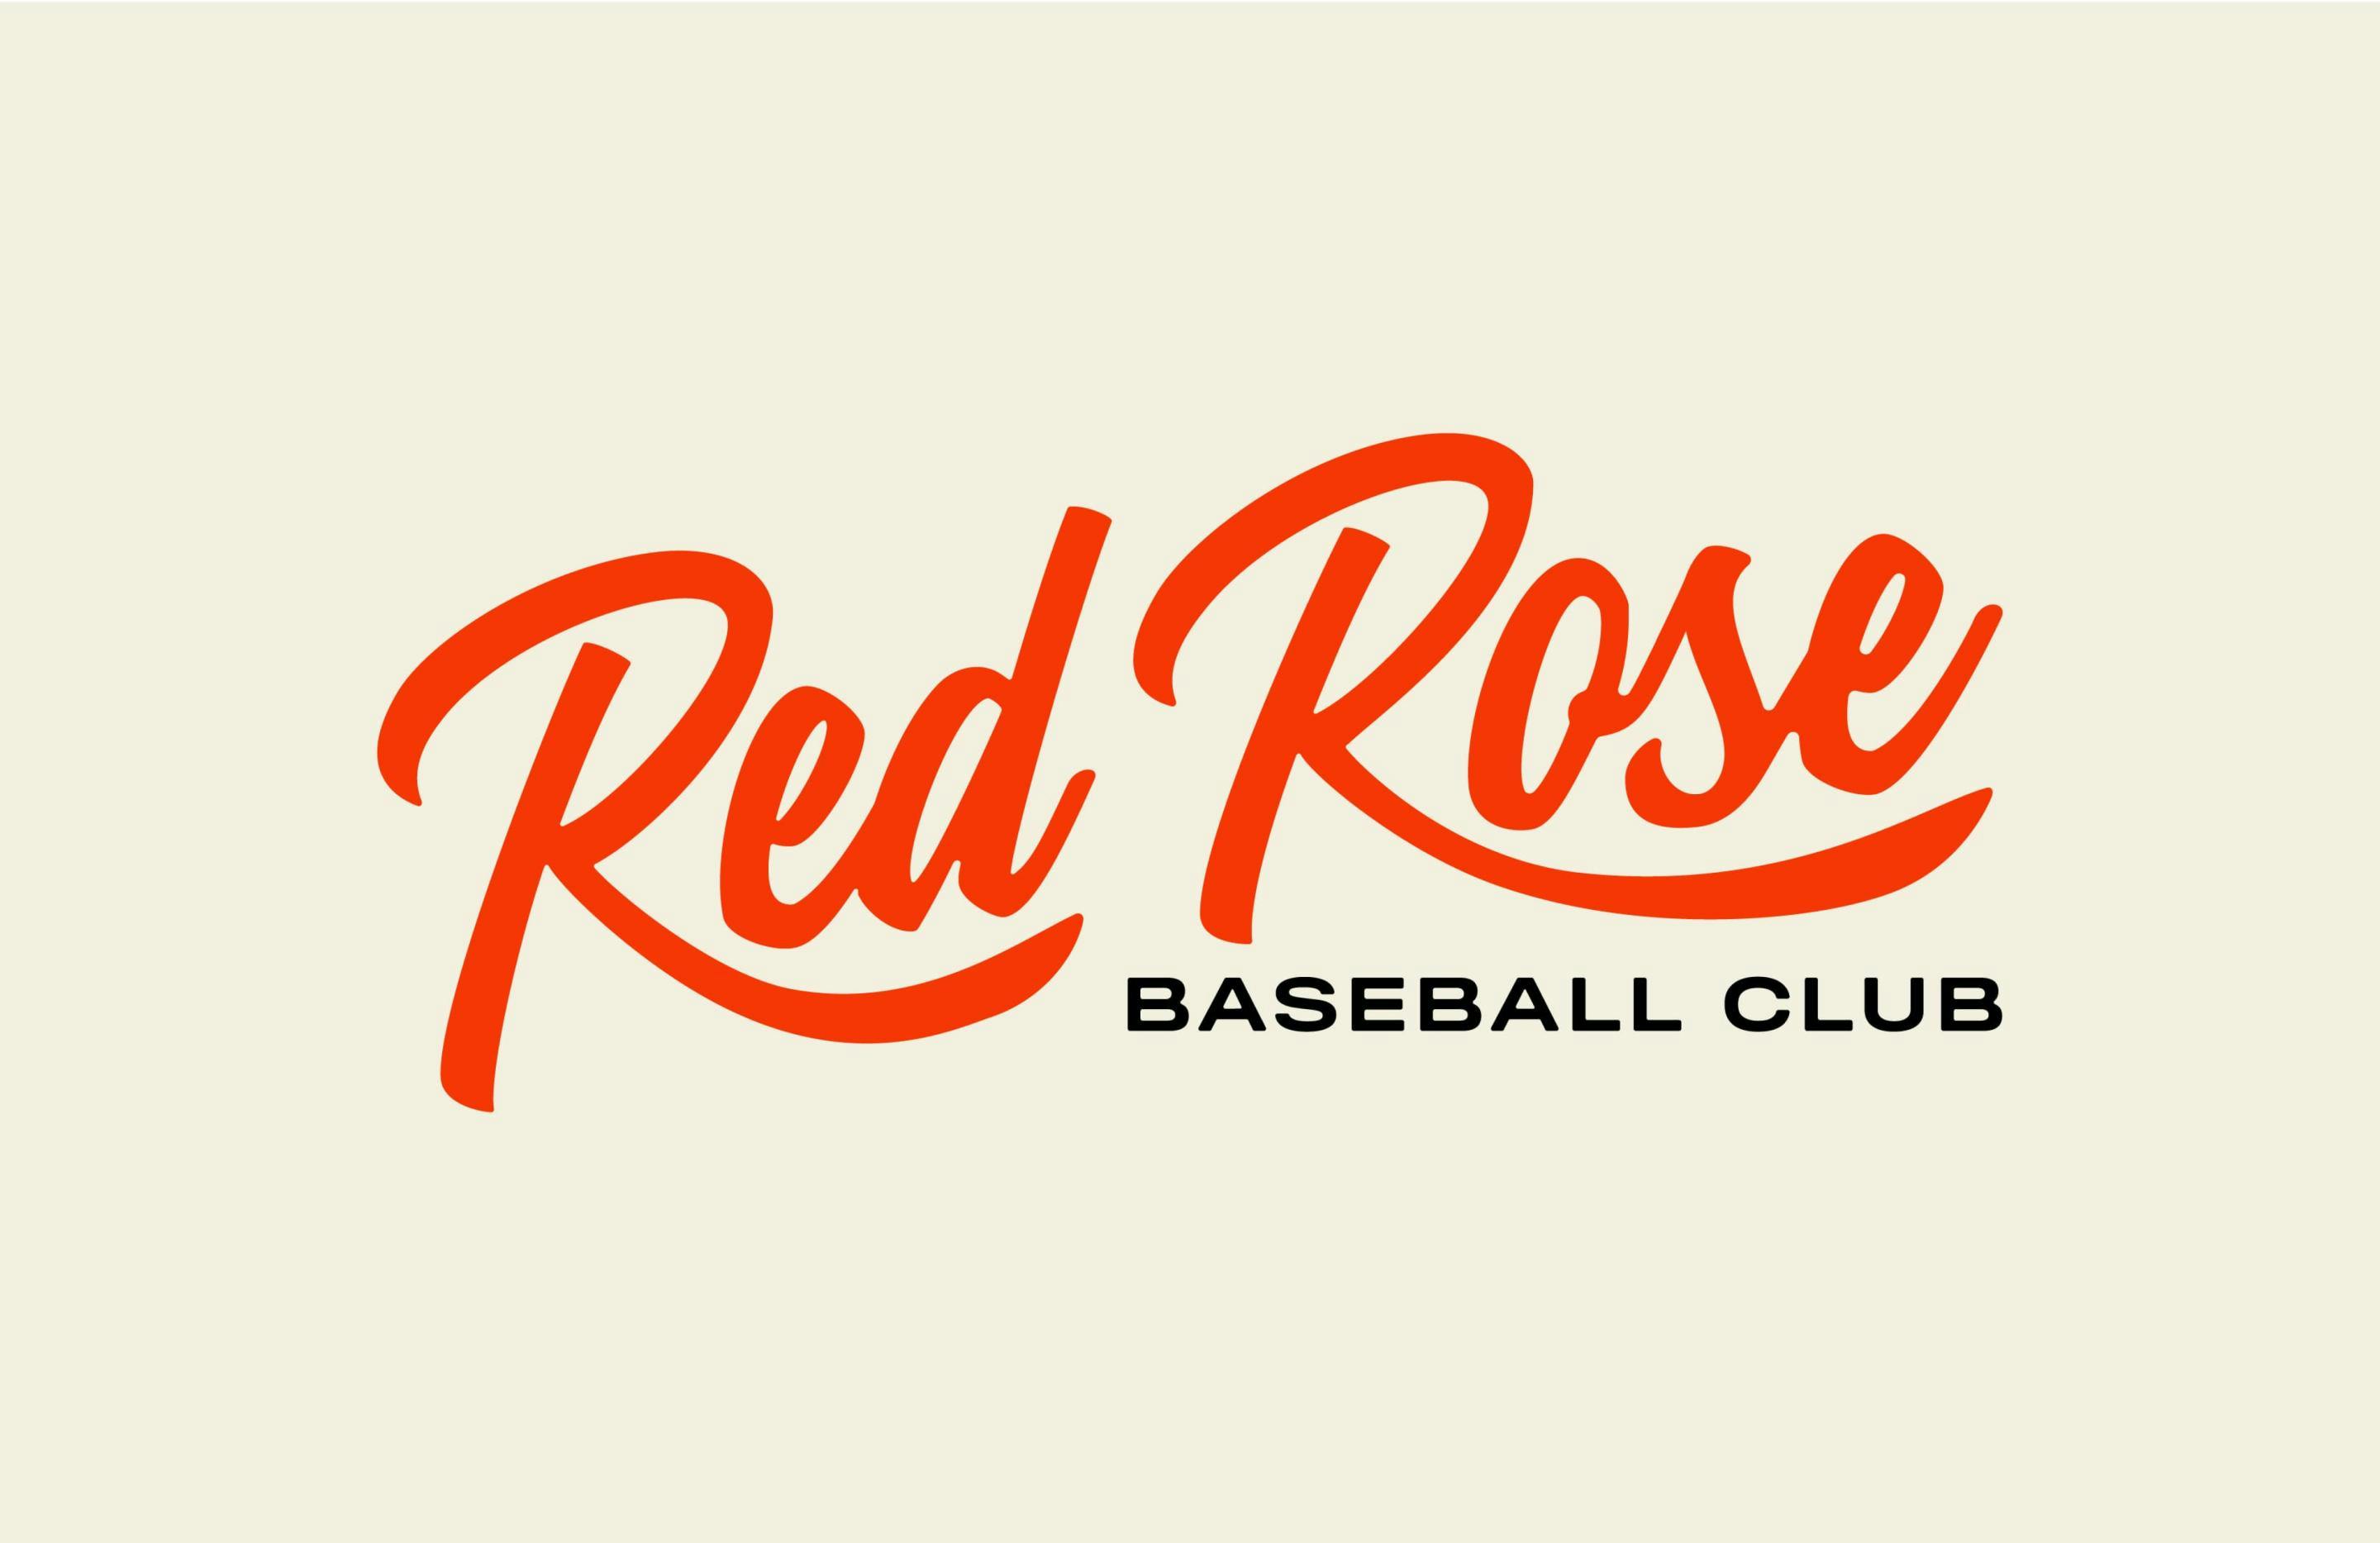 Red Rose Baseball Club